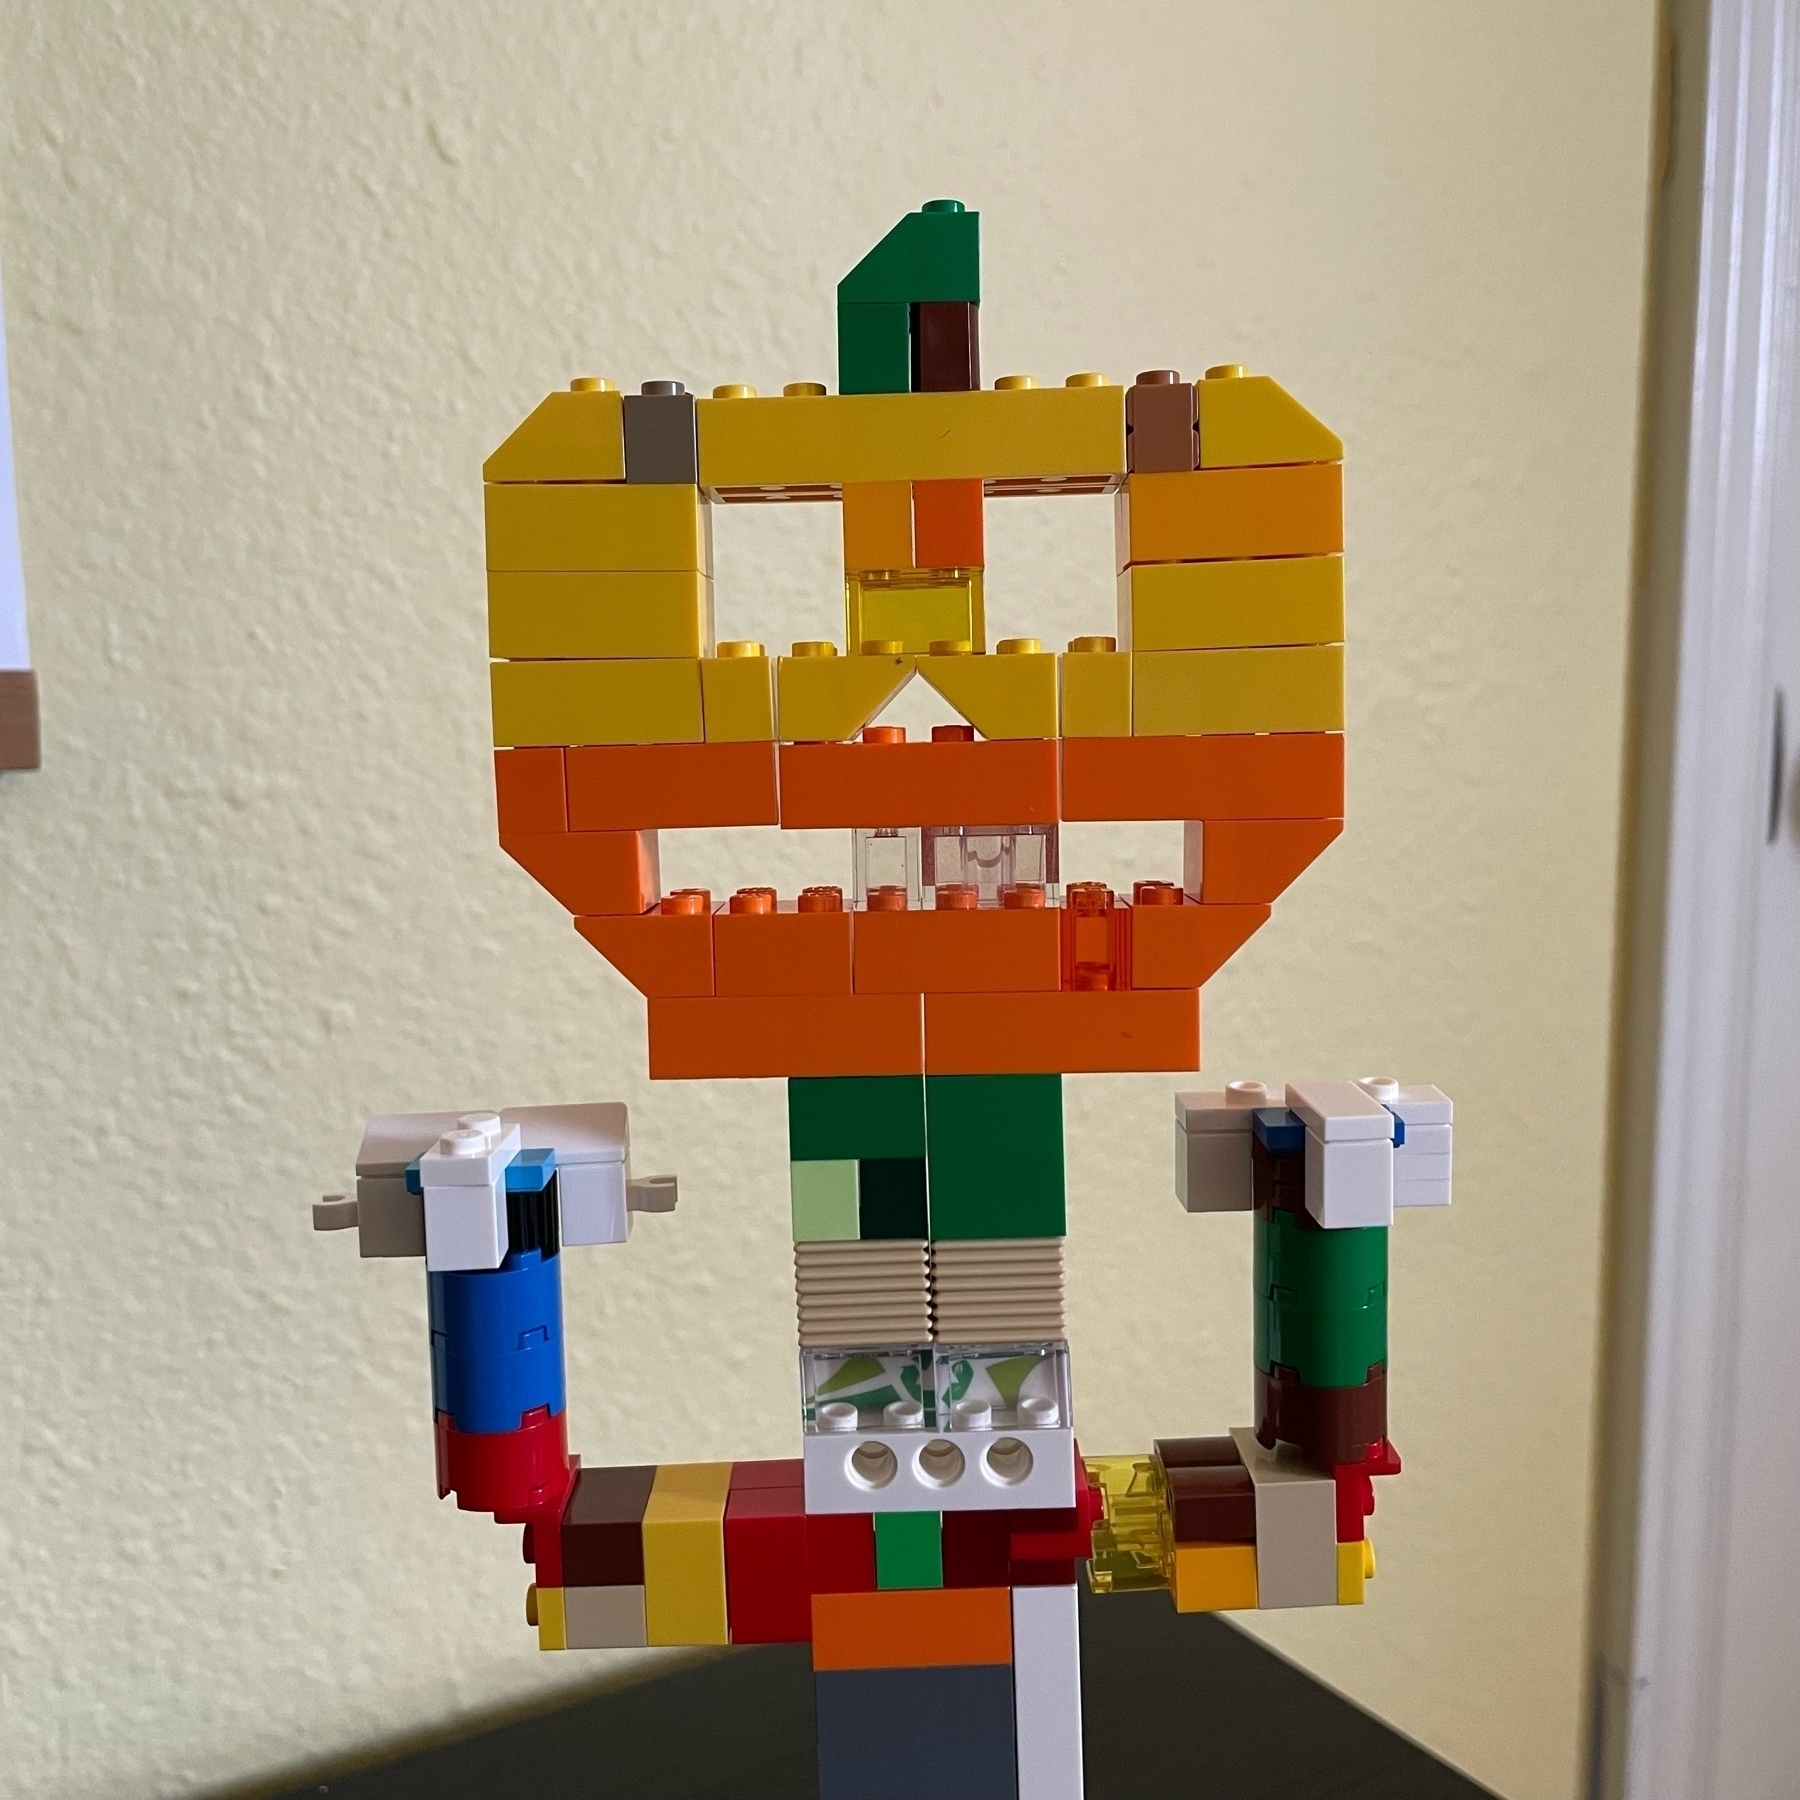 LEGO pumpkin